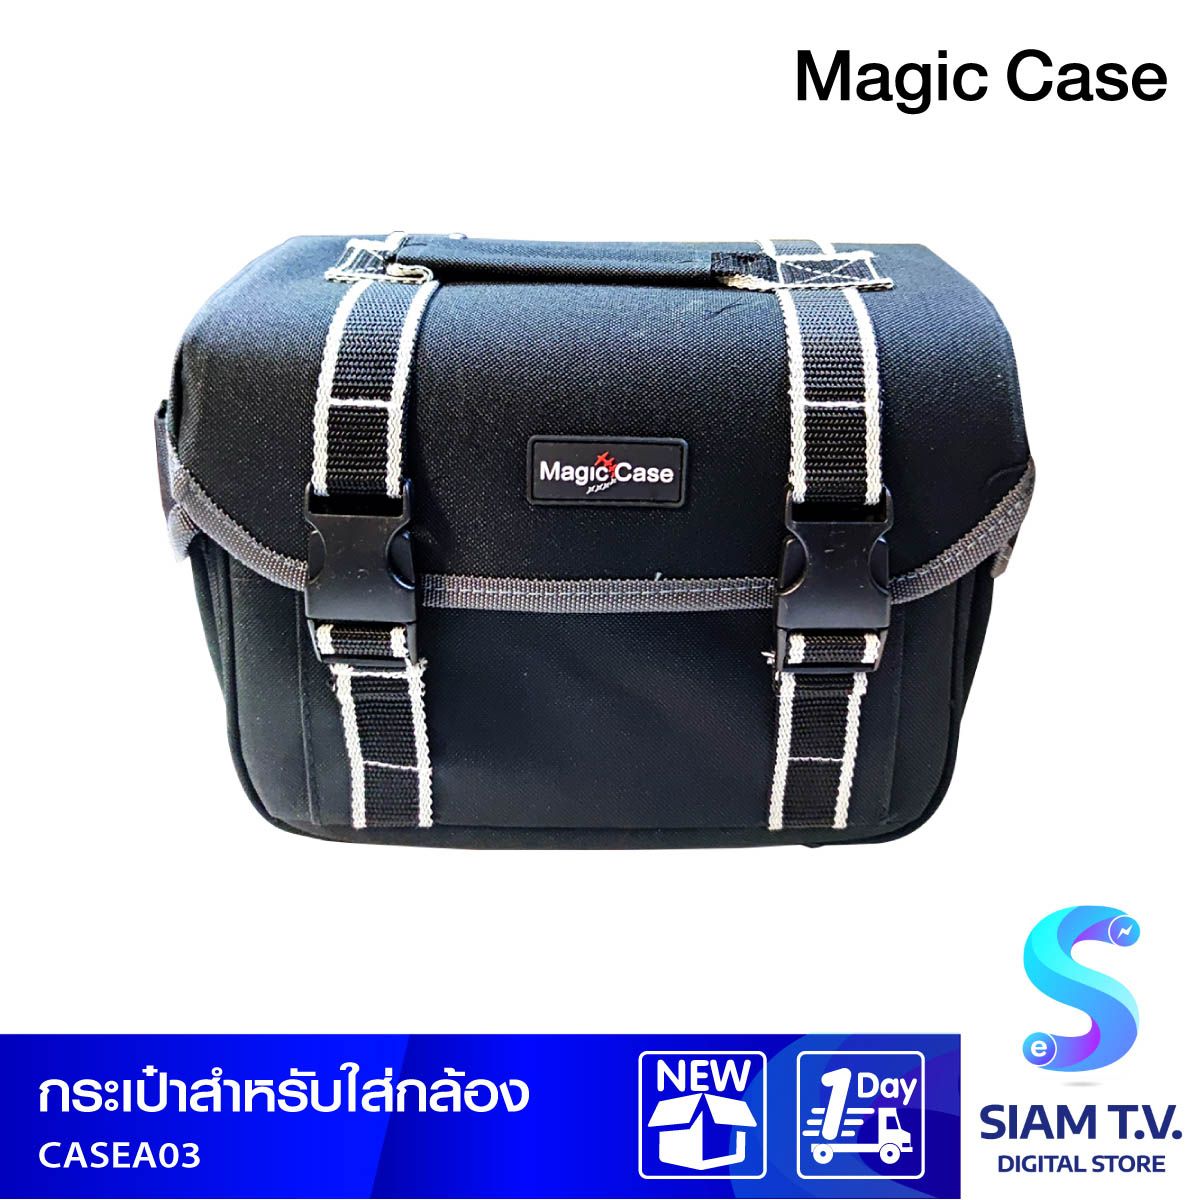 Magic Case กระเป๋าสำหรับใส่กล้อง  รุ่น CASE A03